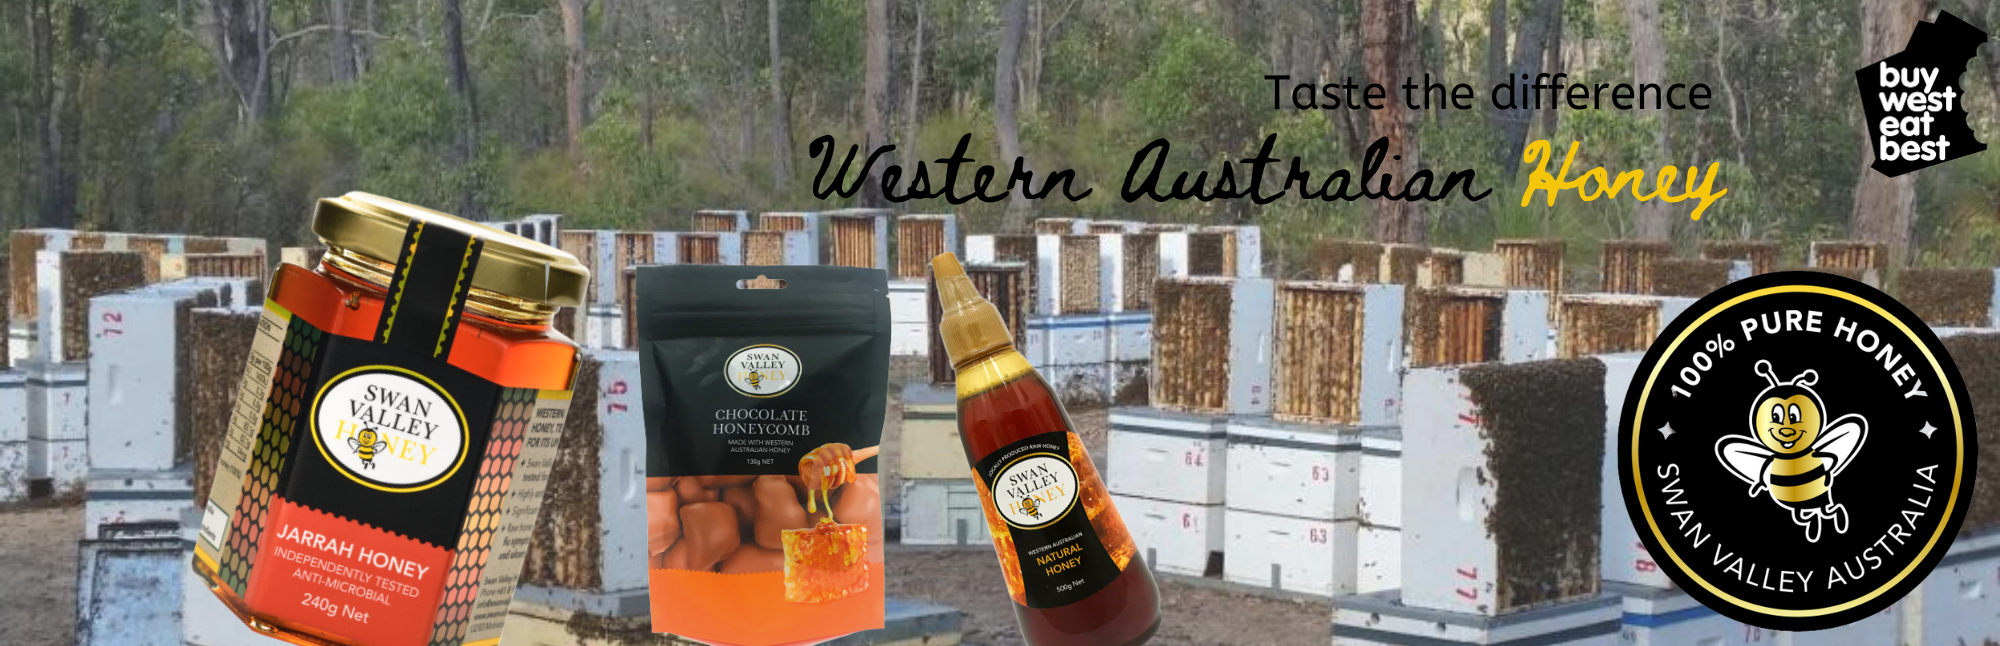 Western Australian Pure Natural Honey Banner